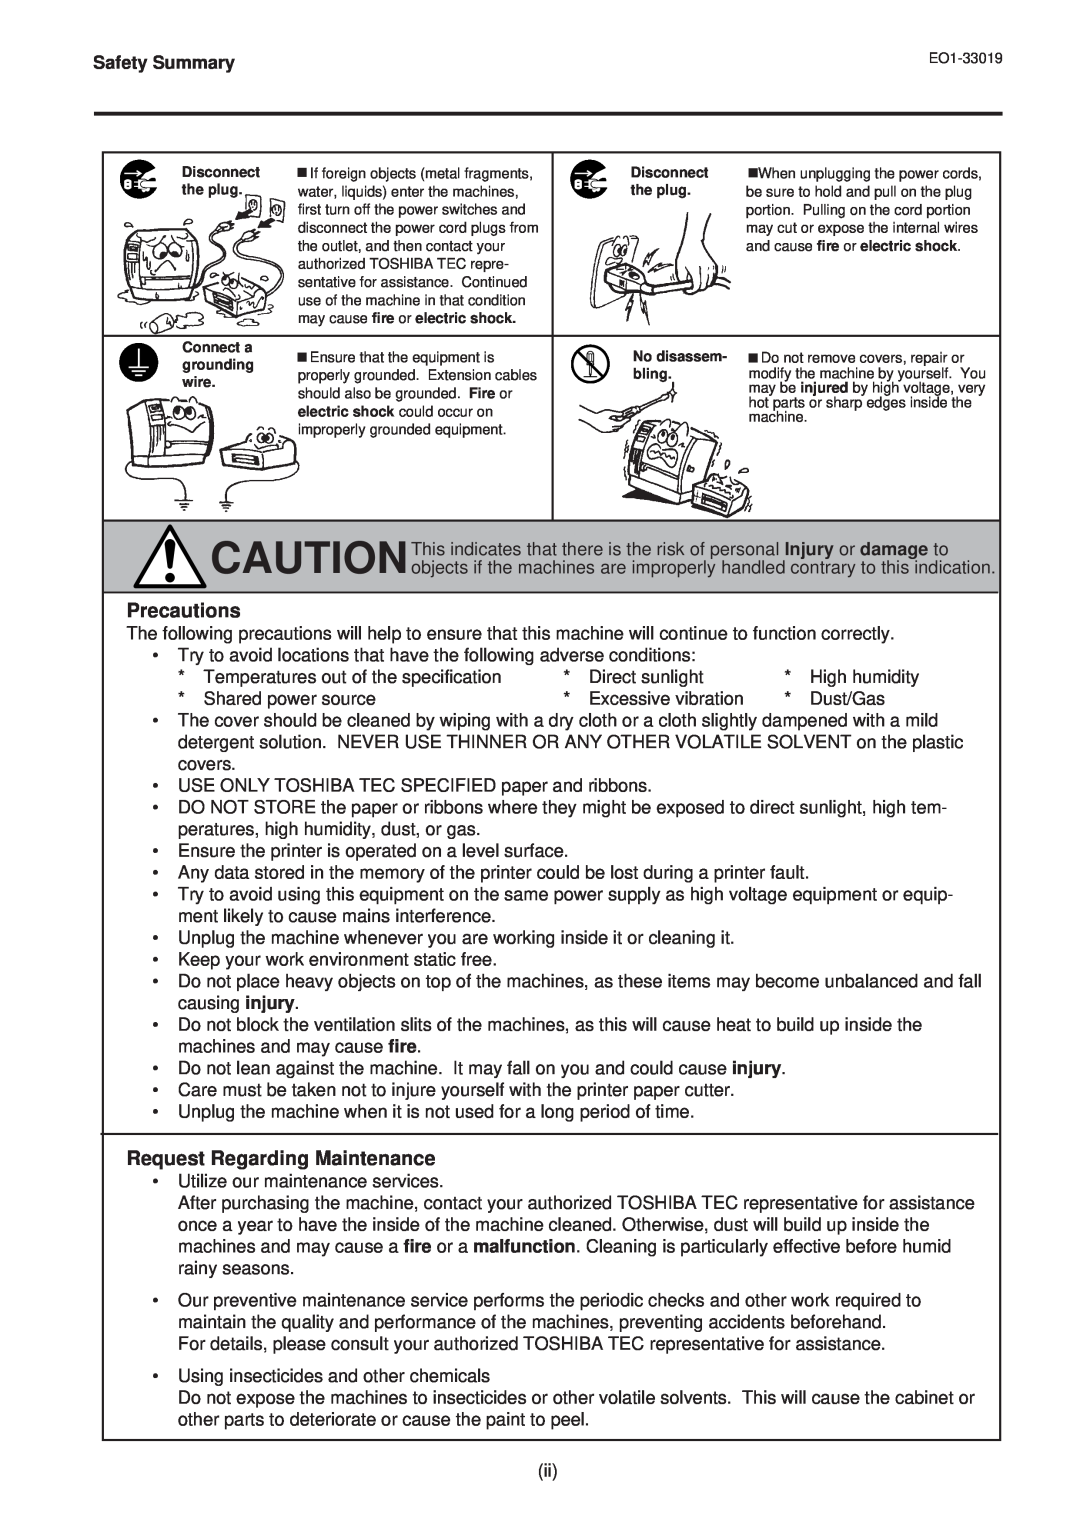 Toshiba B-450-HS-QQ owner manual Precautions, Request Regarding Maintenance, Safety Summary 